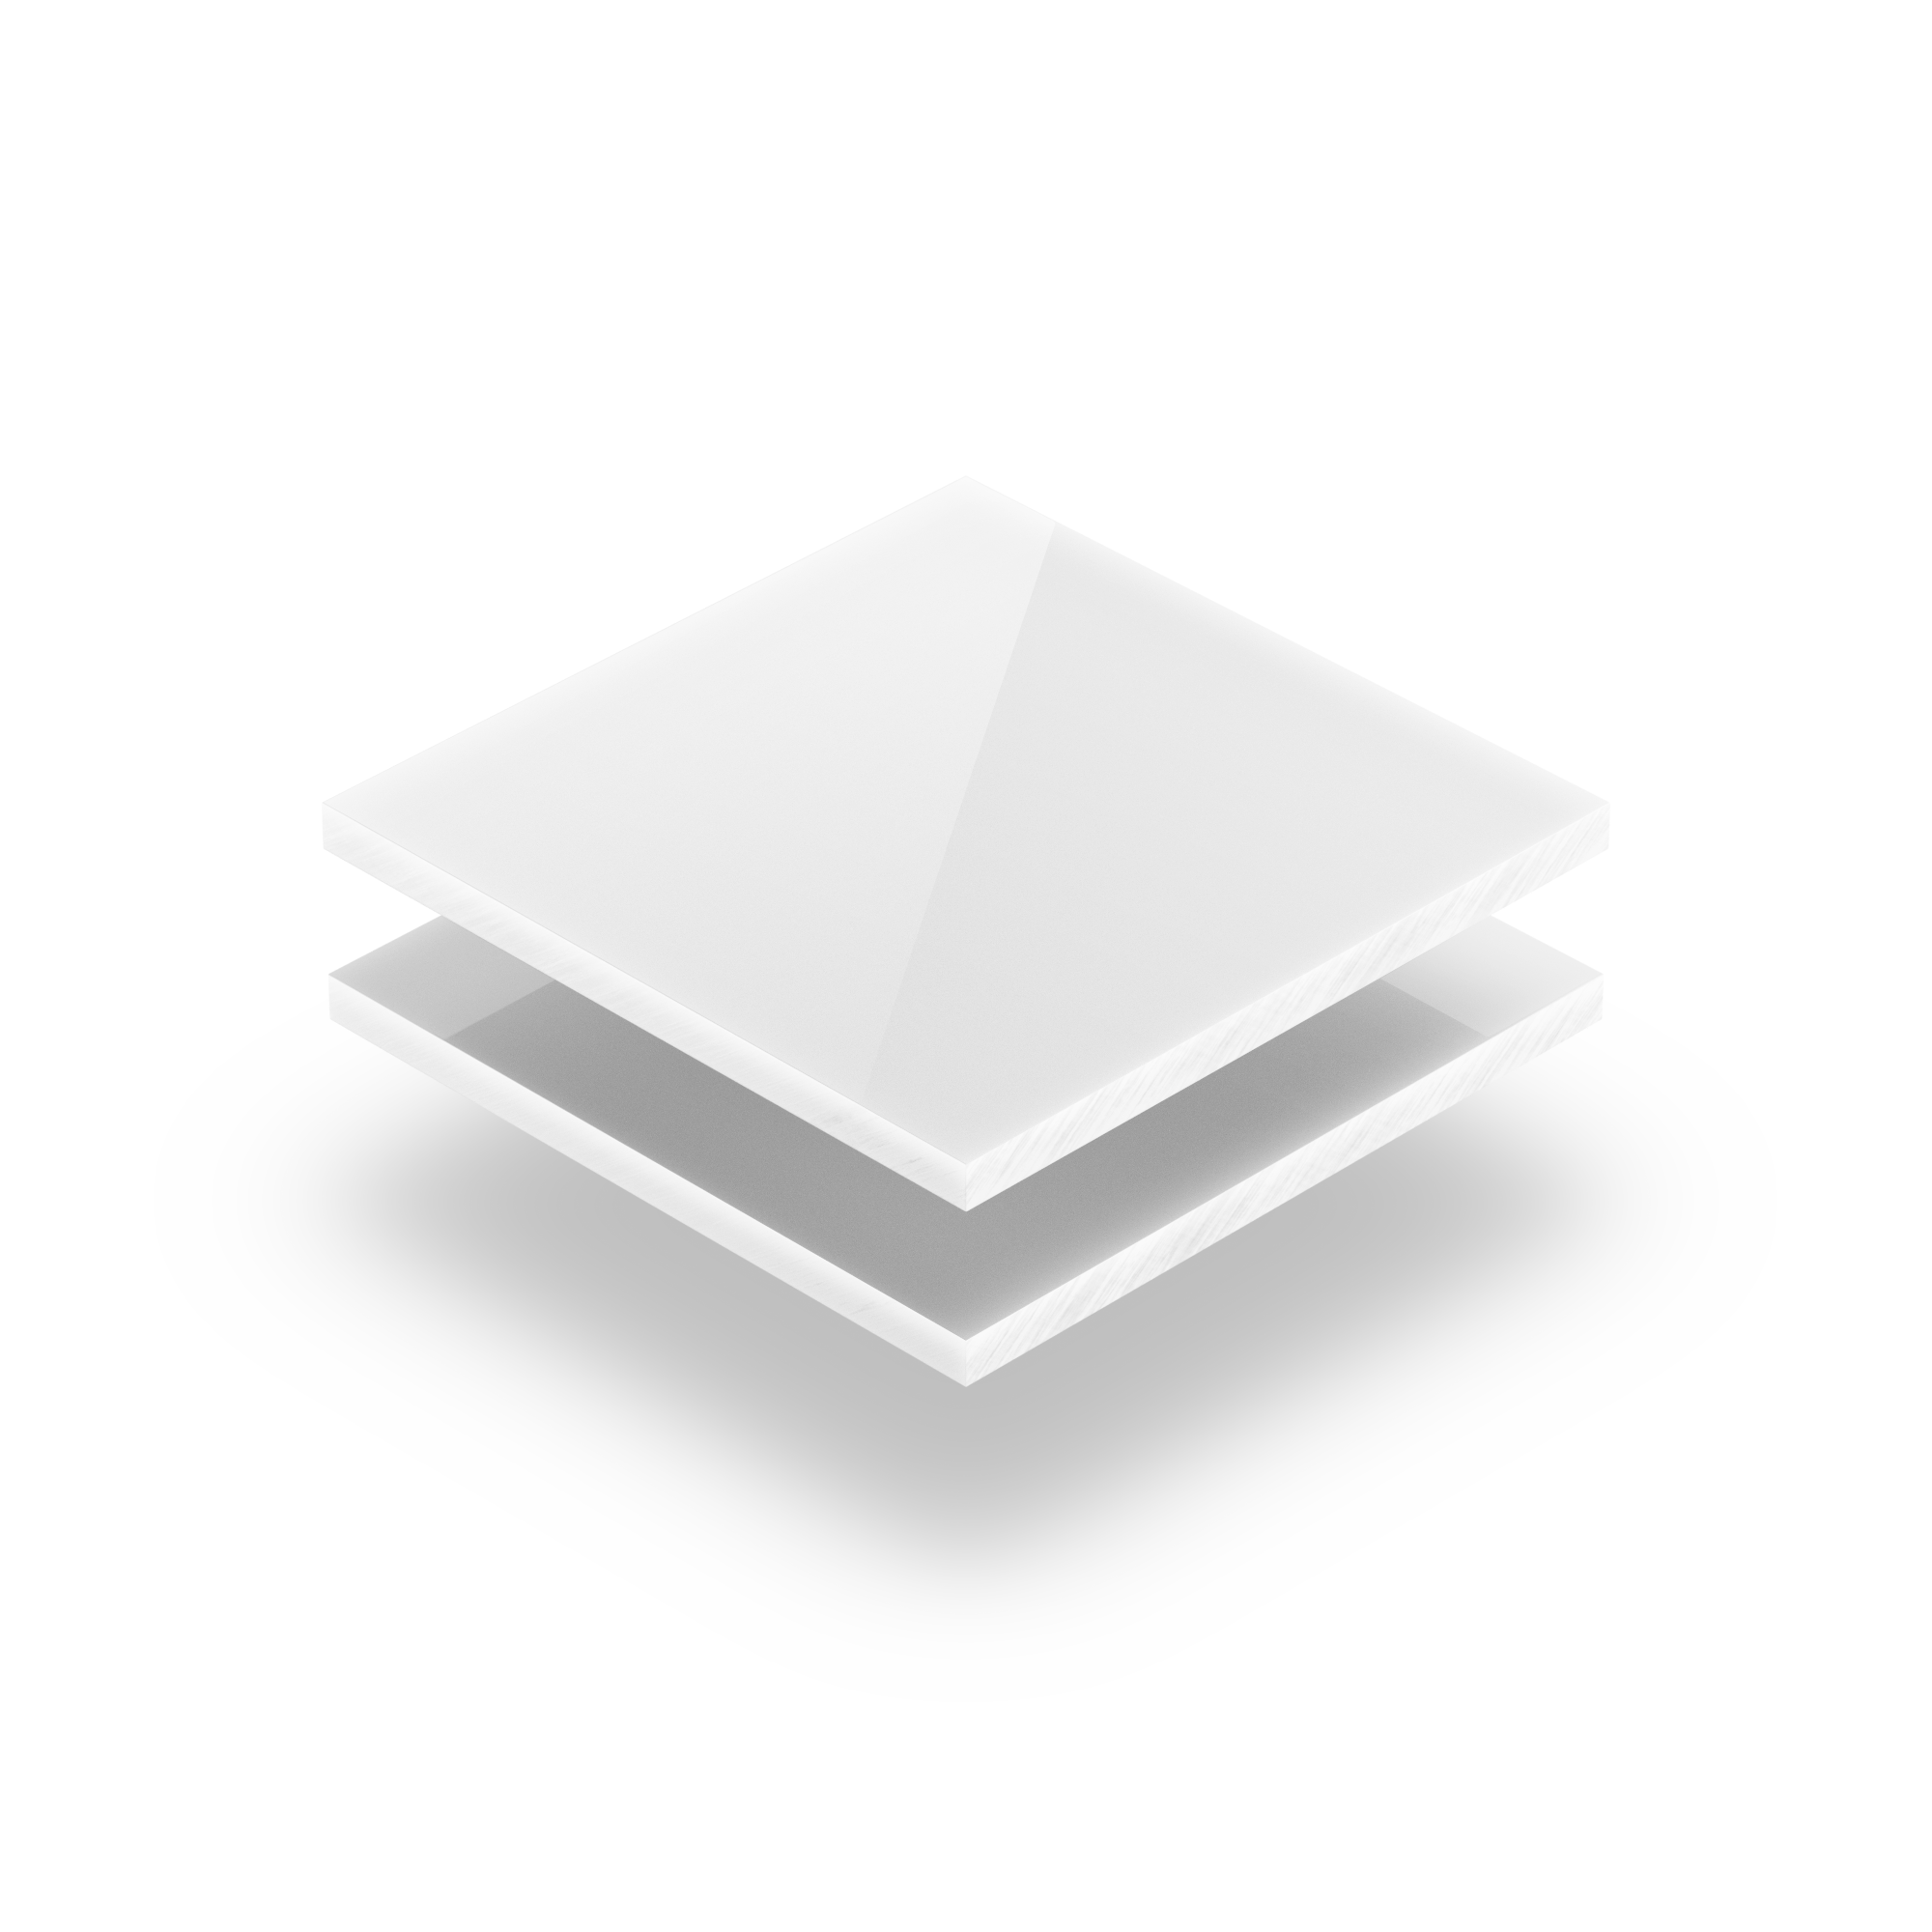 White Acrylic Sheet Plastic Sheets KF Plastics